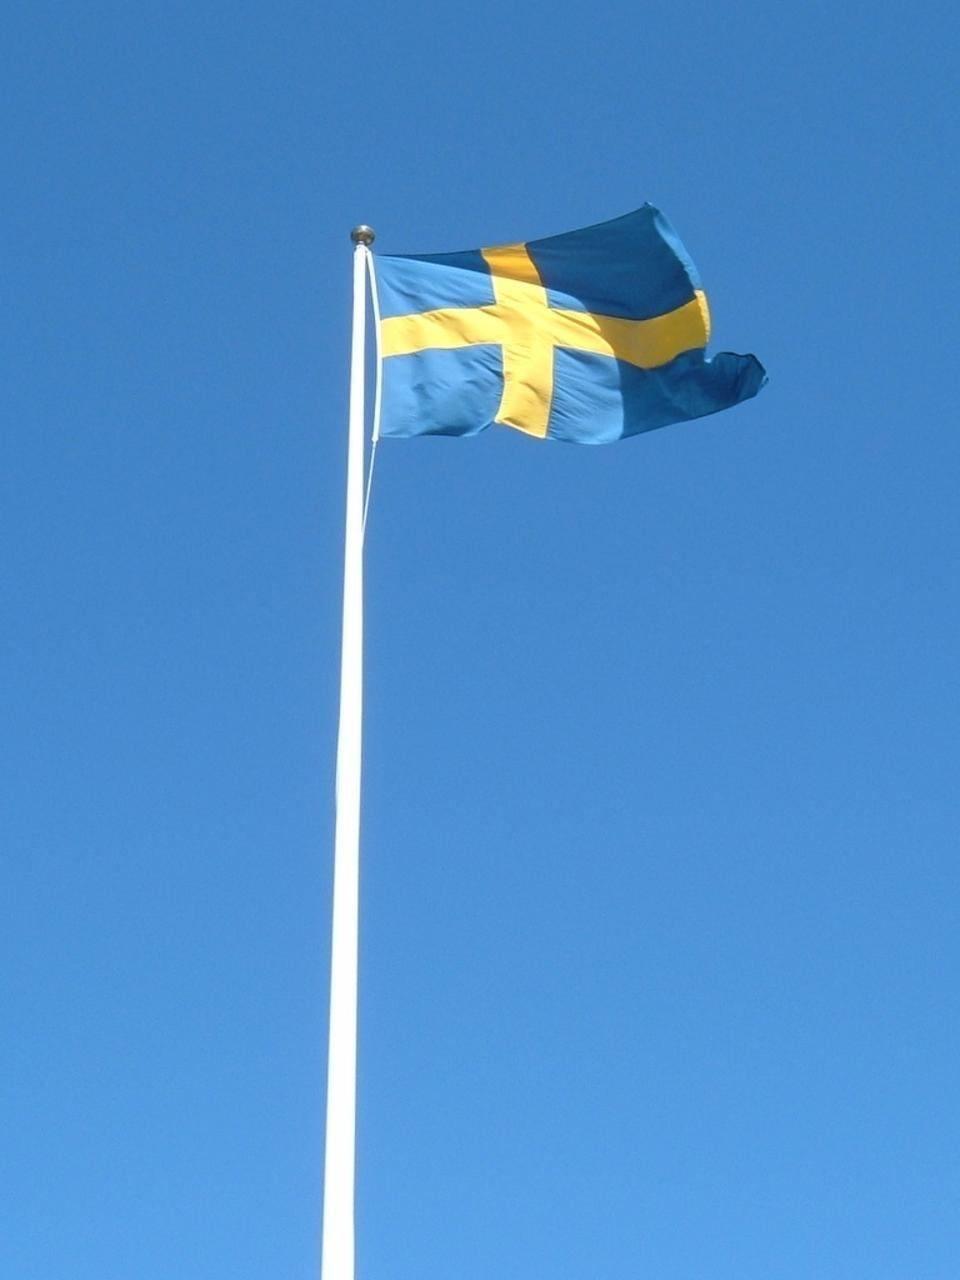 Free picture: Swedish flag, mast